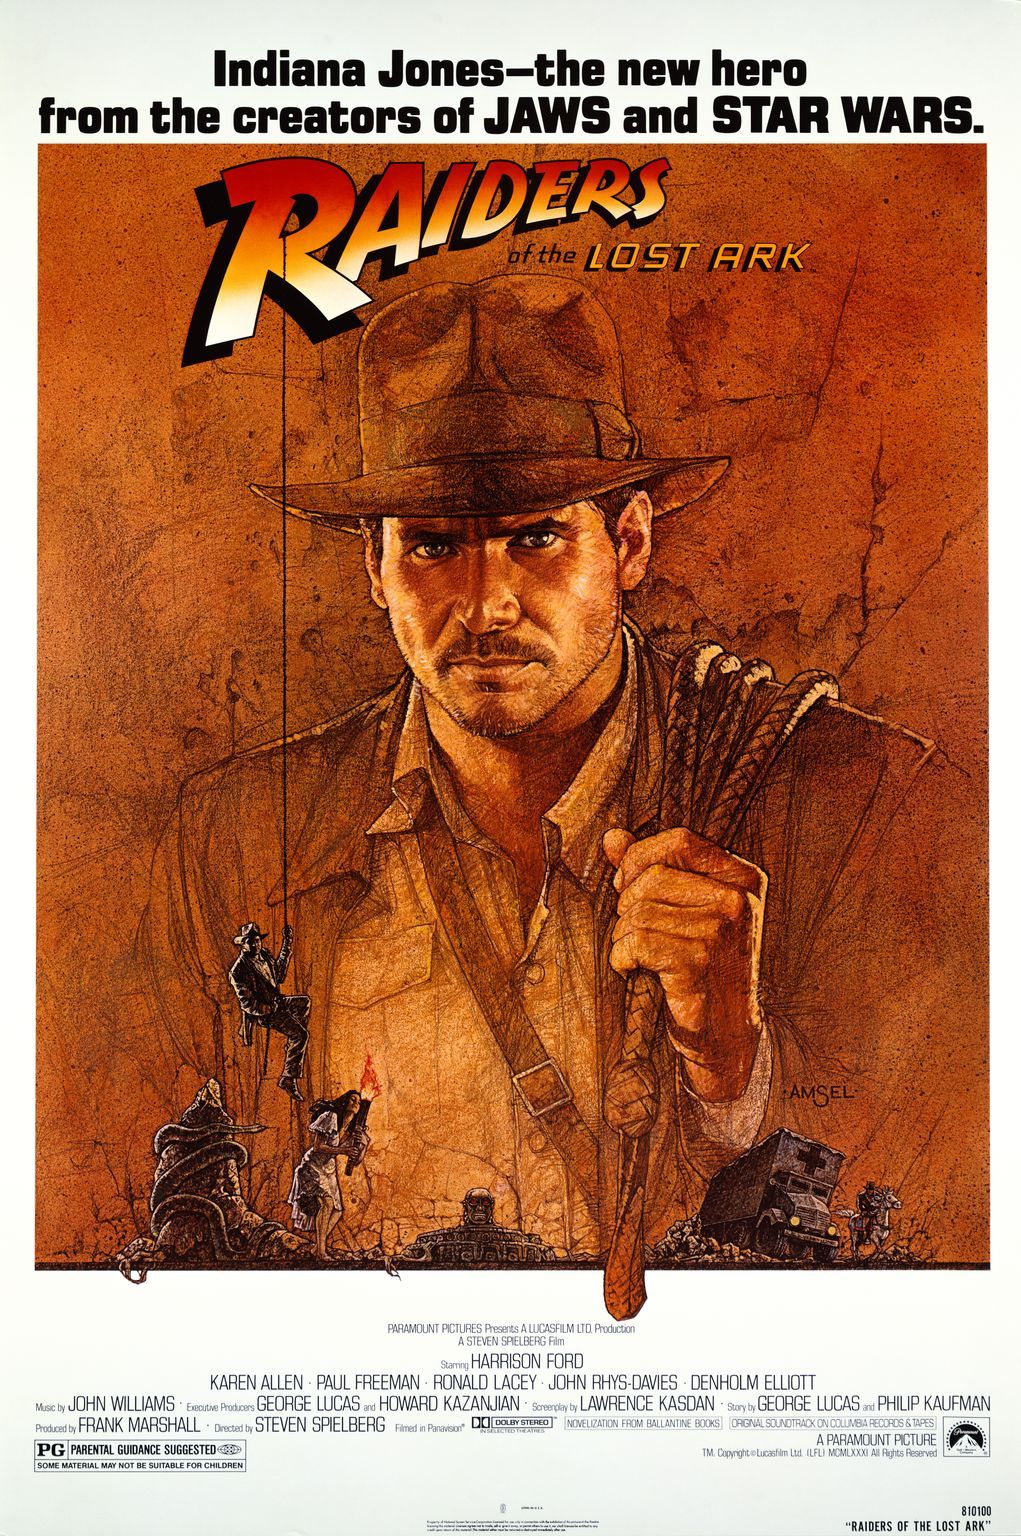 Indiana Jones Raiders of the Lost Ark 1 (1981) ขุมทรัพย์สุดขอบฟ้า 1 Harrison Ford